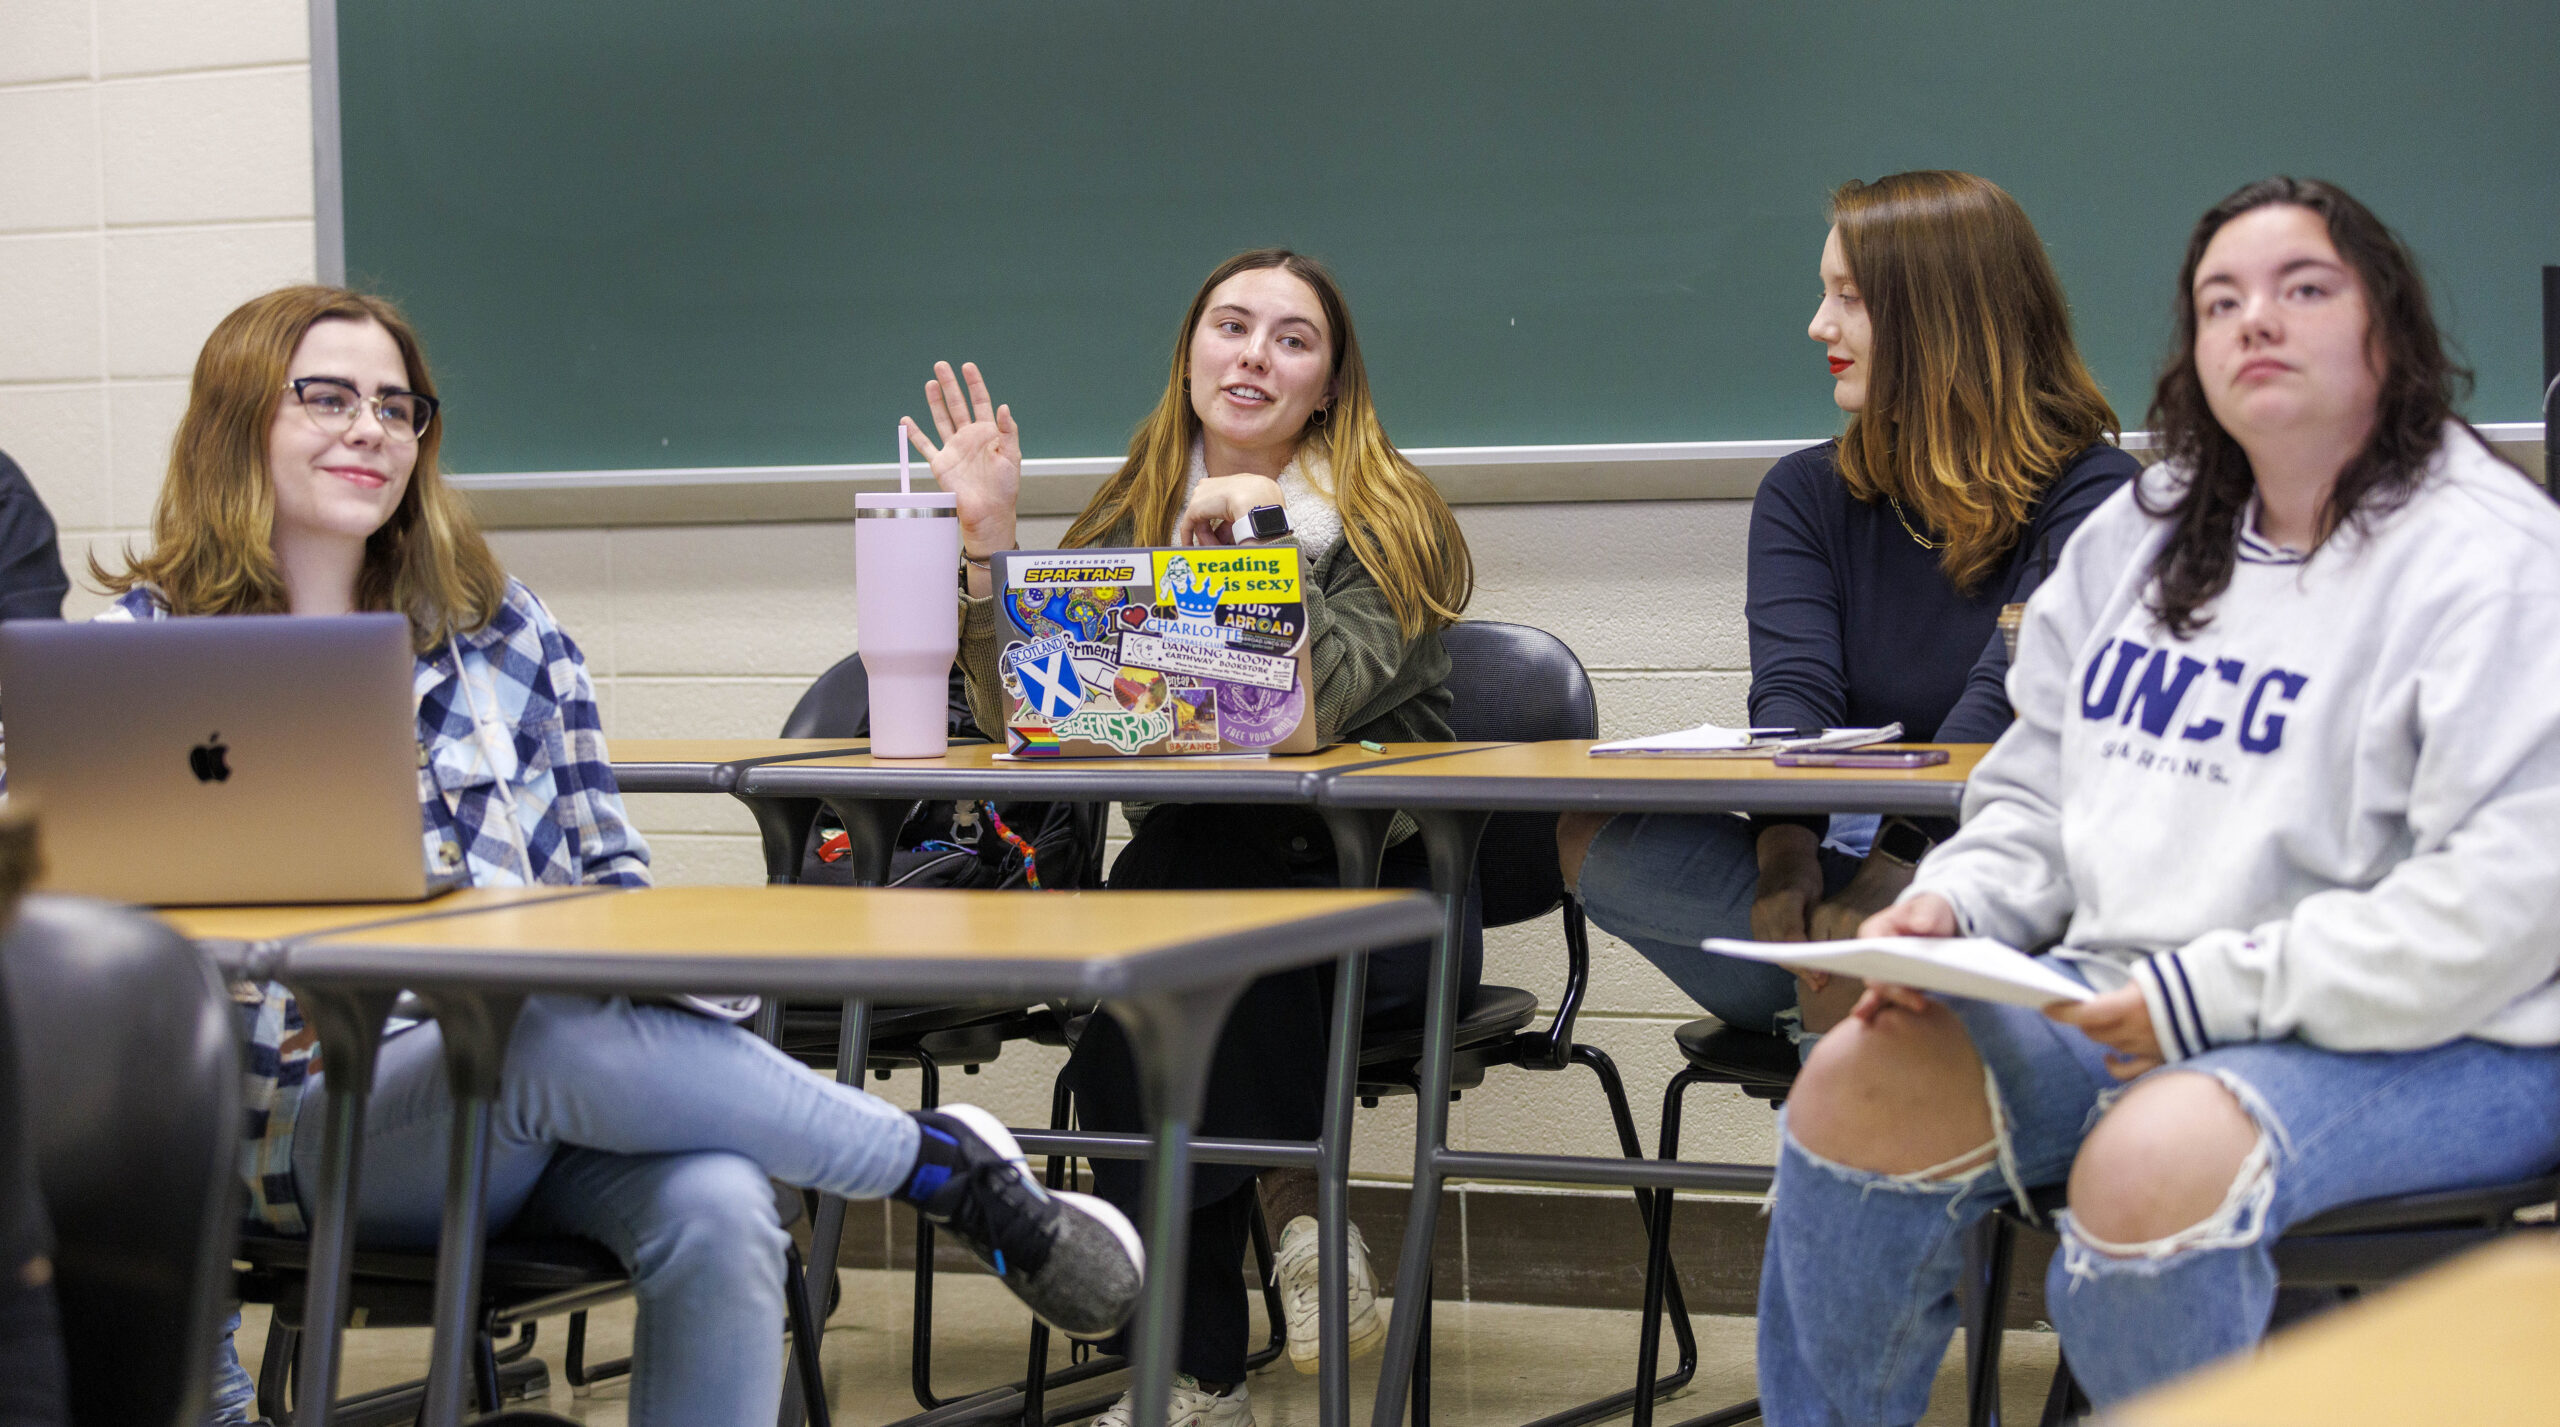 Four students sitting at desks